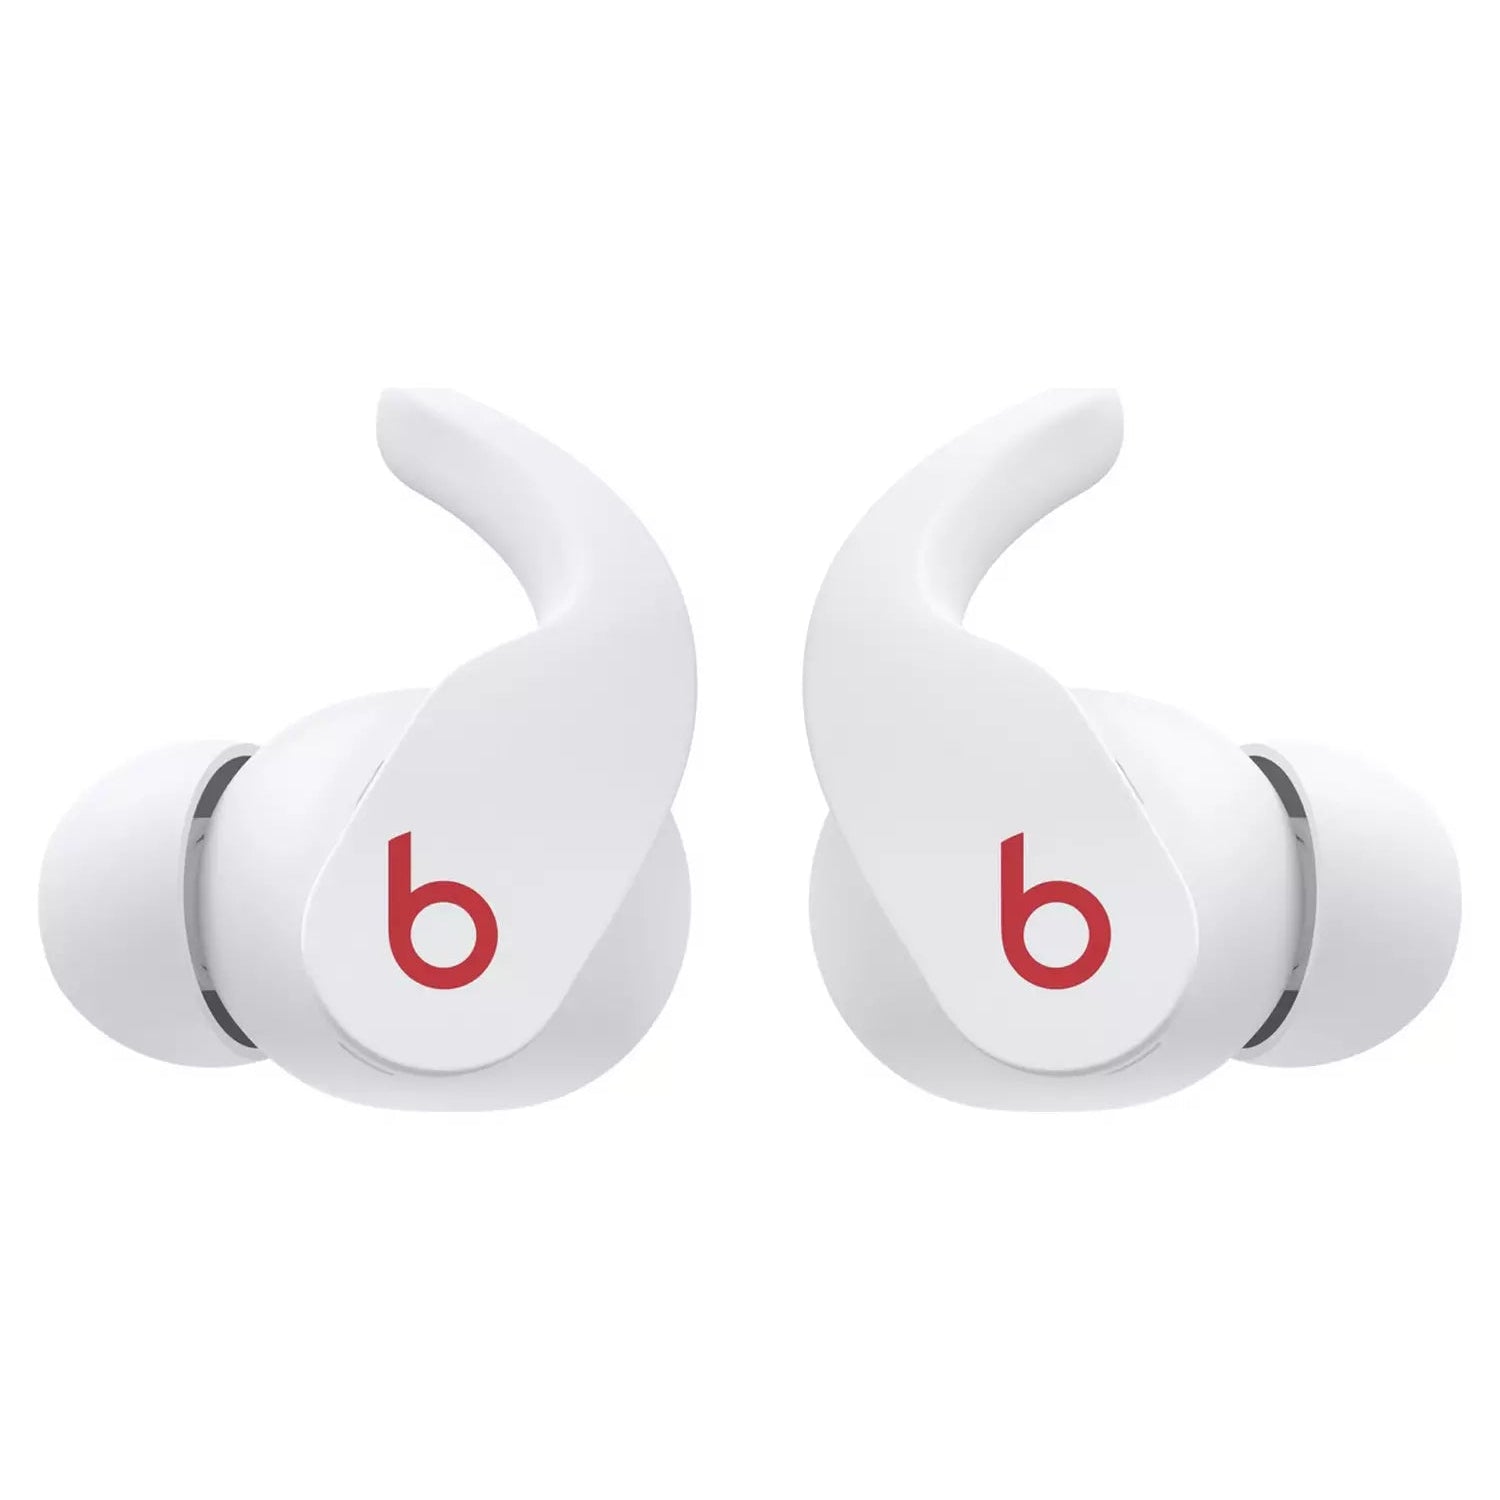 Beats Fit Pro True Wireless In-Ear Earbuds - White - Refurbished Pristine